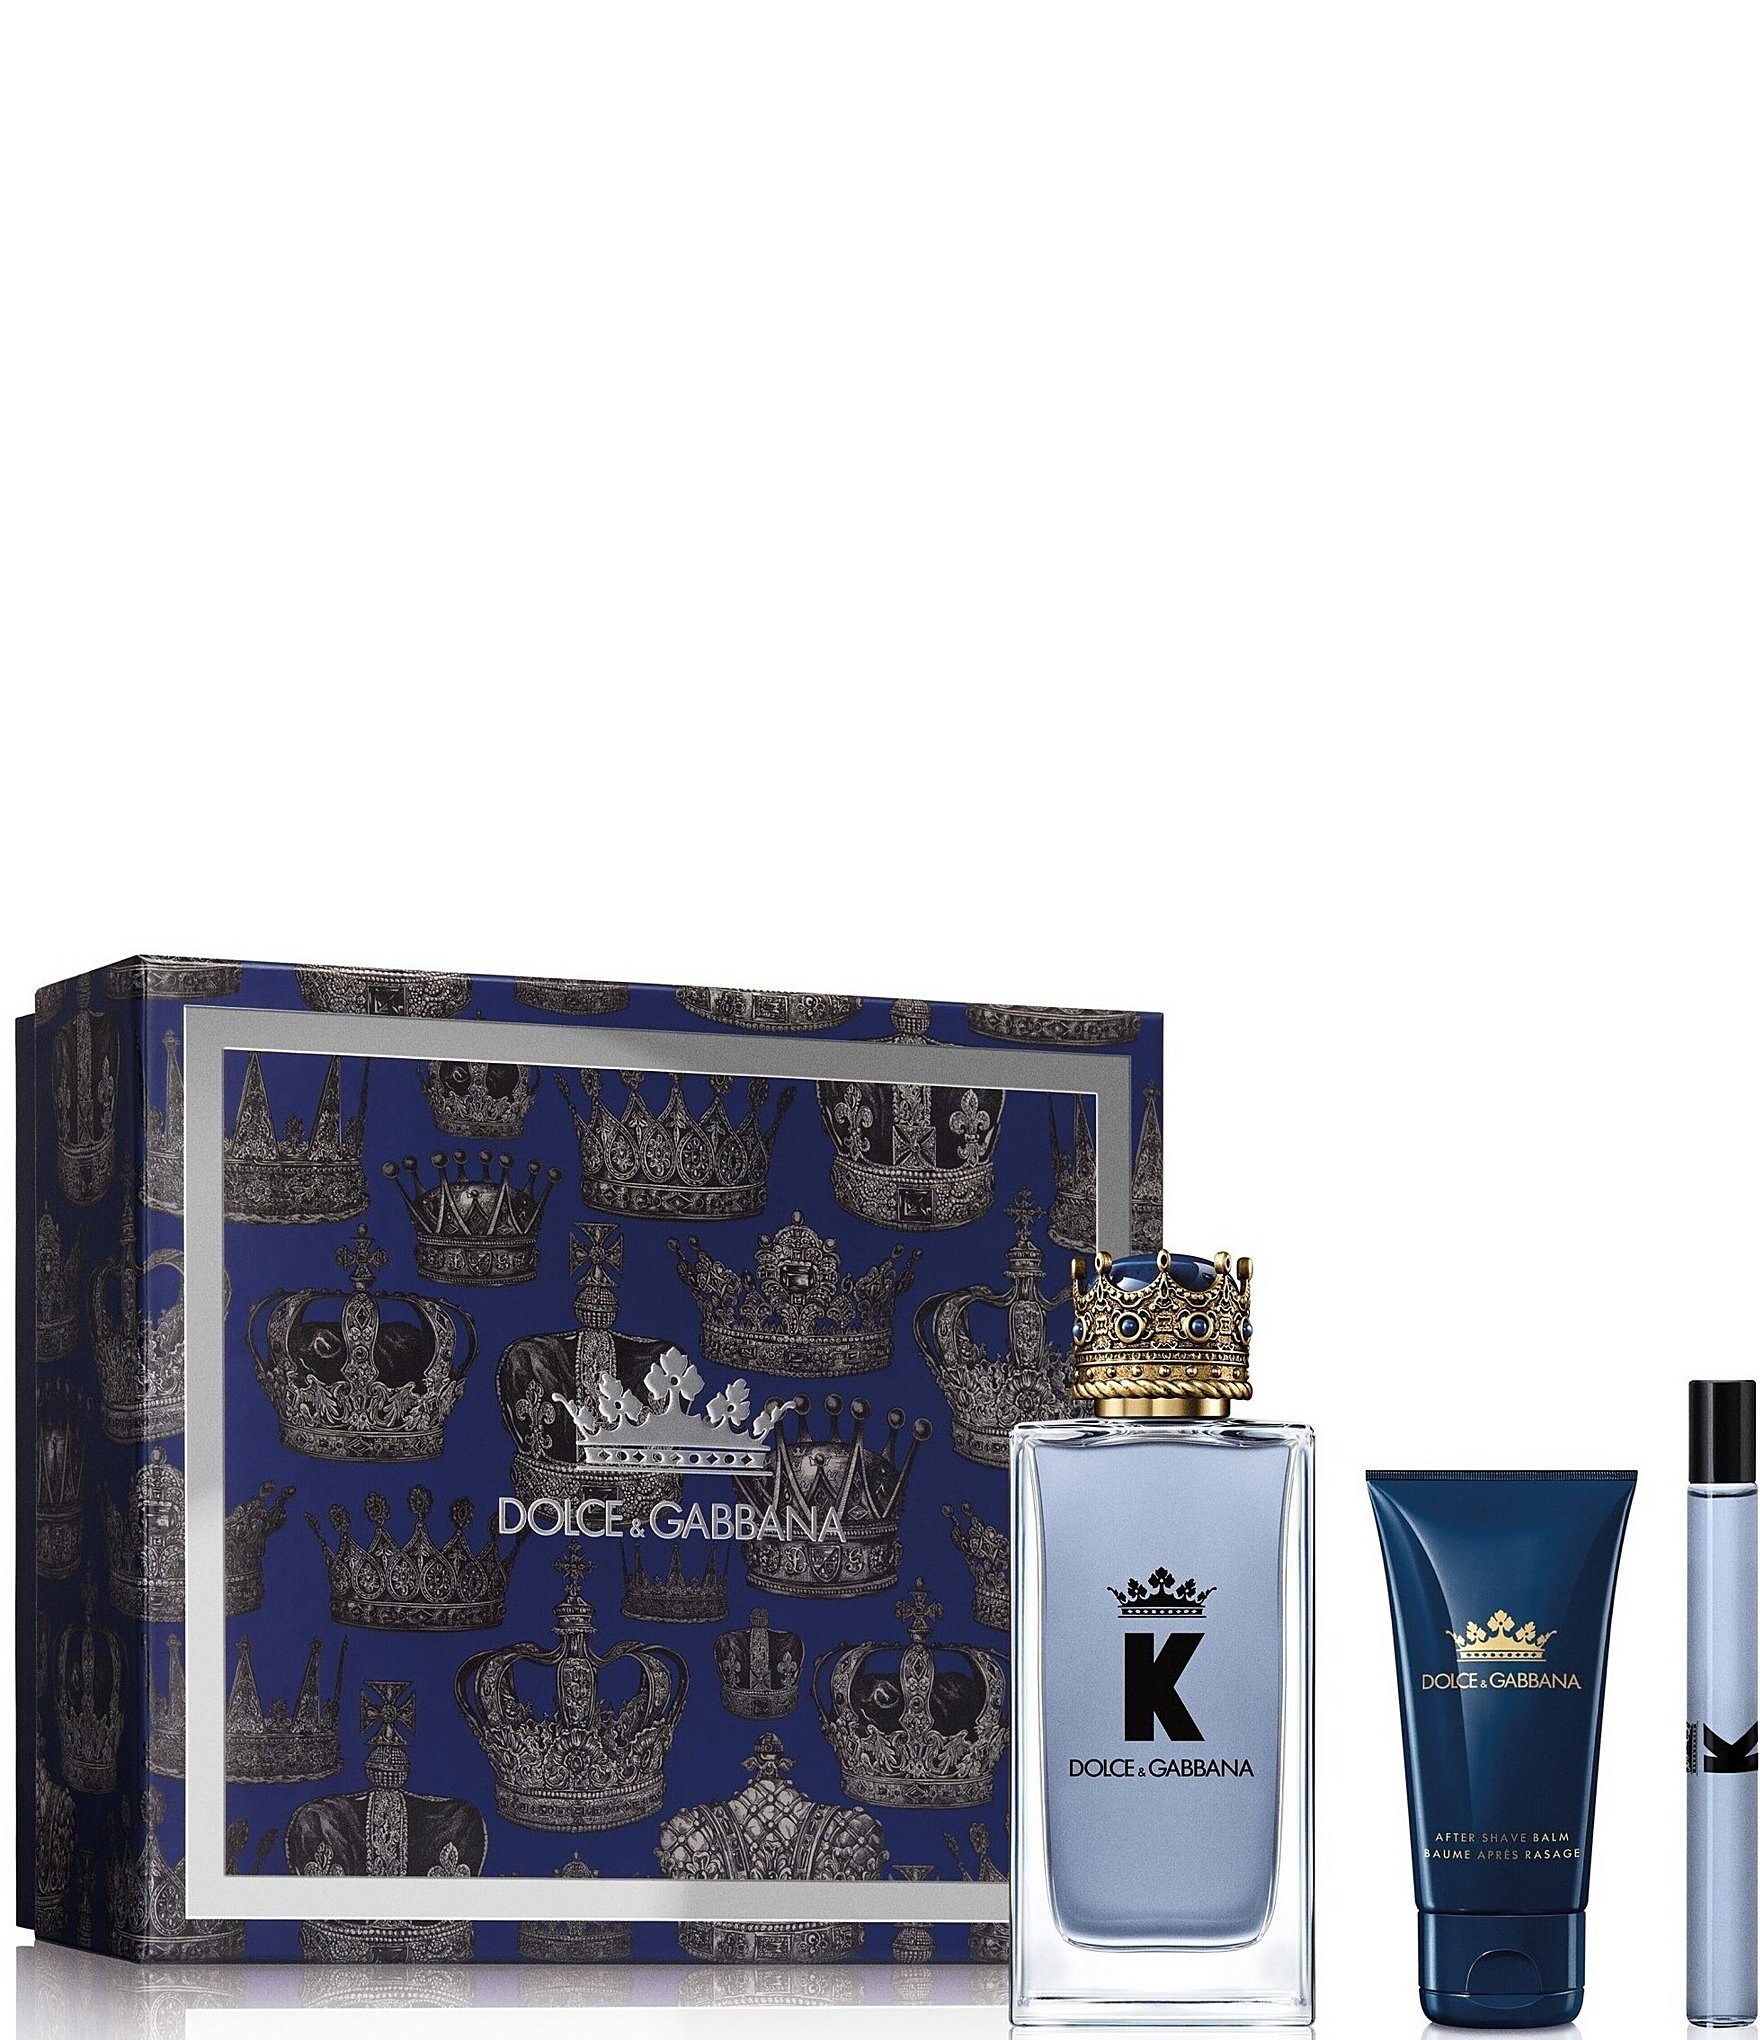 Dolce & Gabbana K by Dolce & Gabbana Eau de Toilette Gift Set | Dillard's